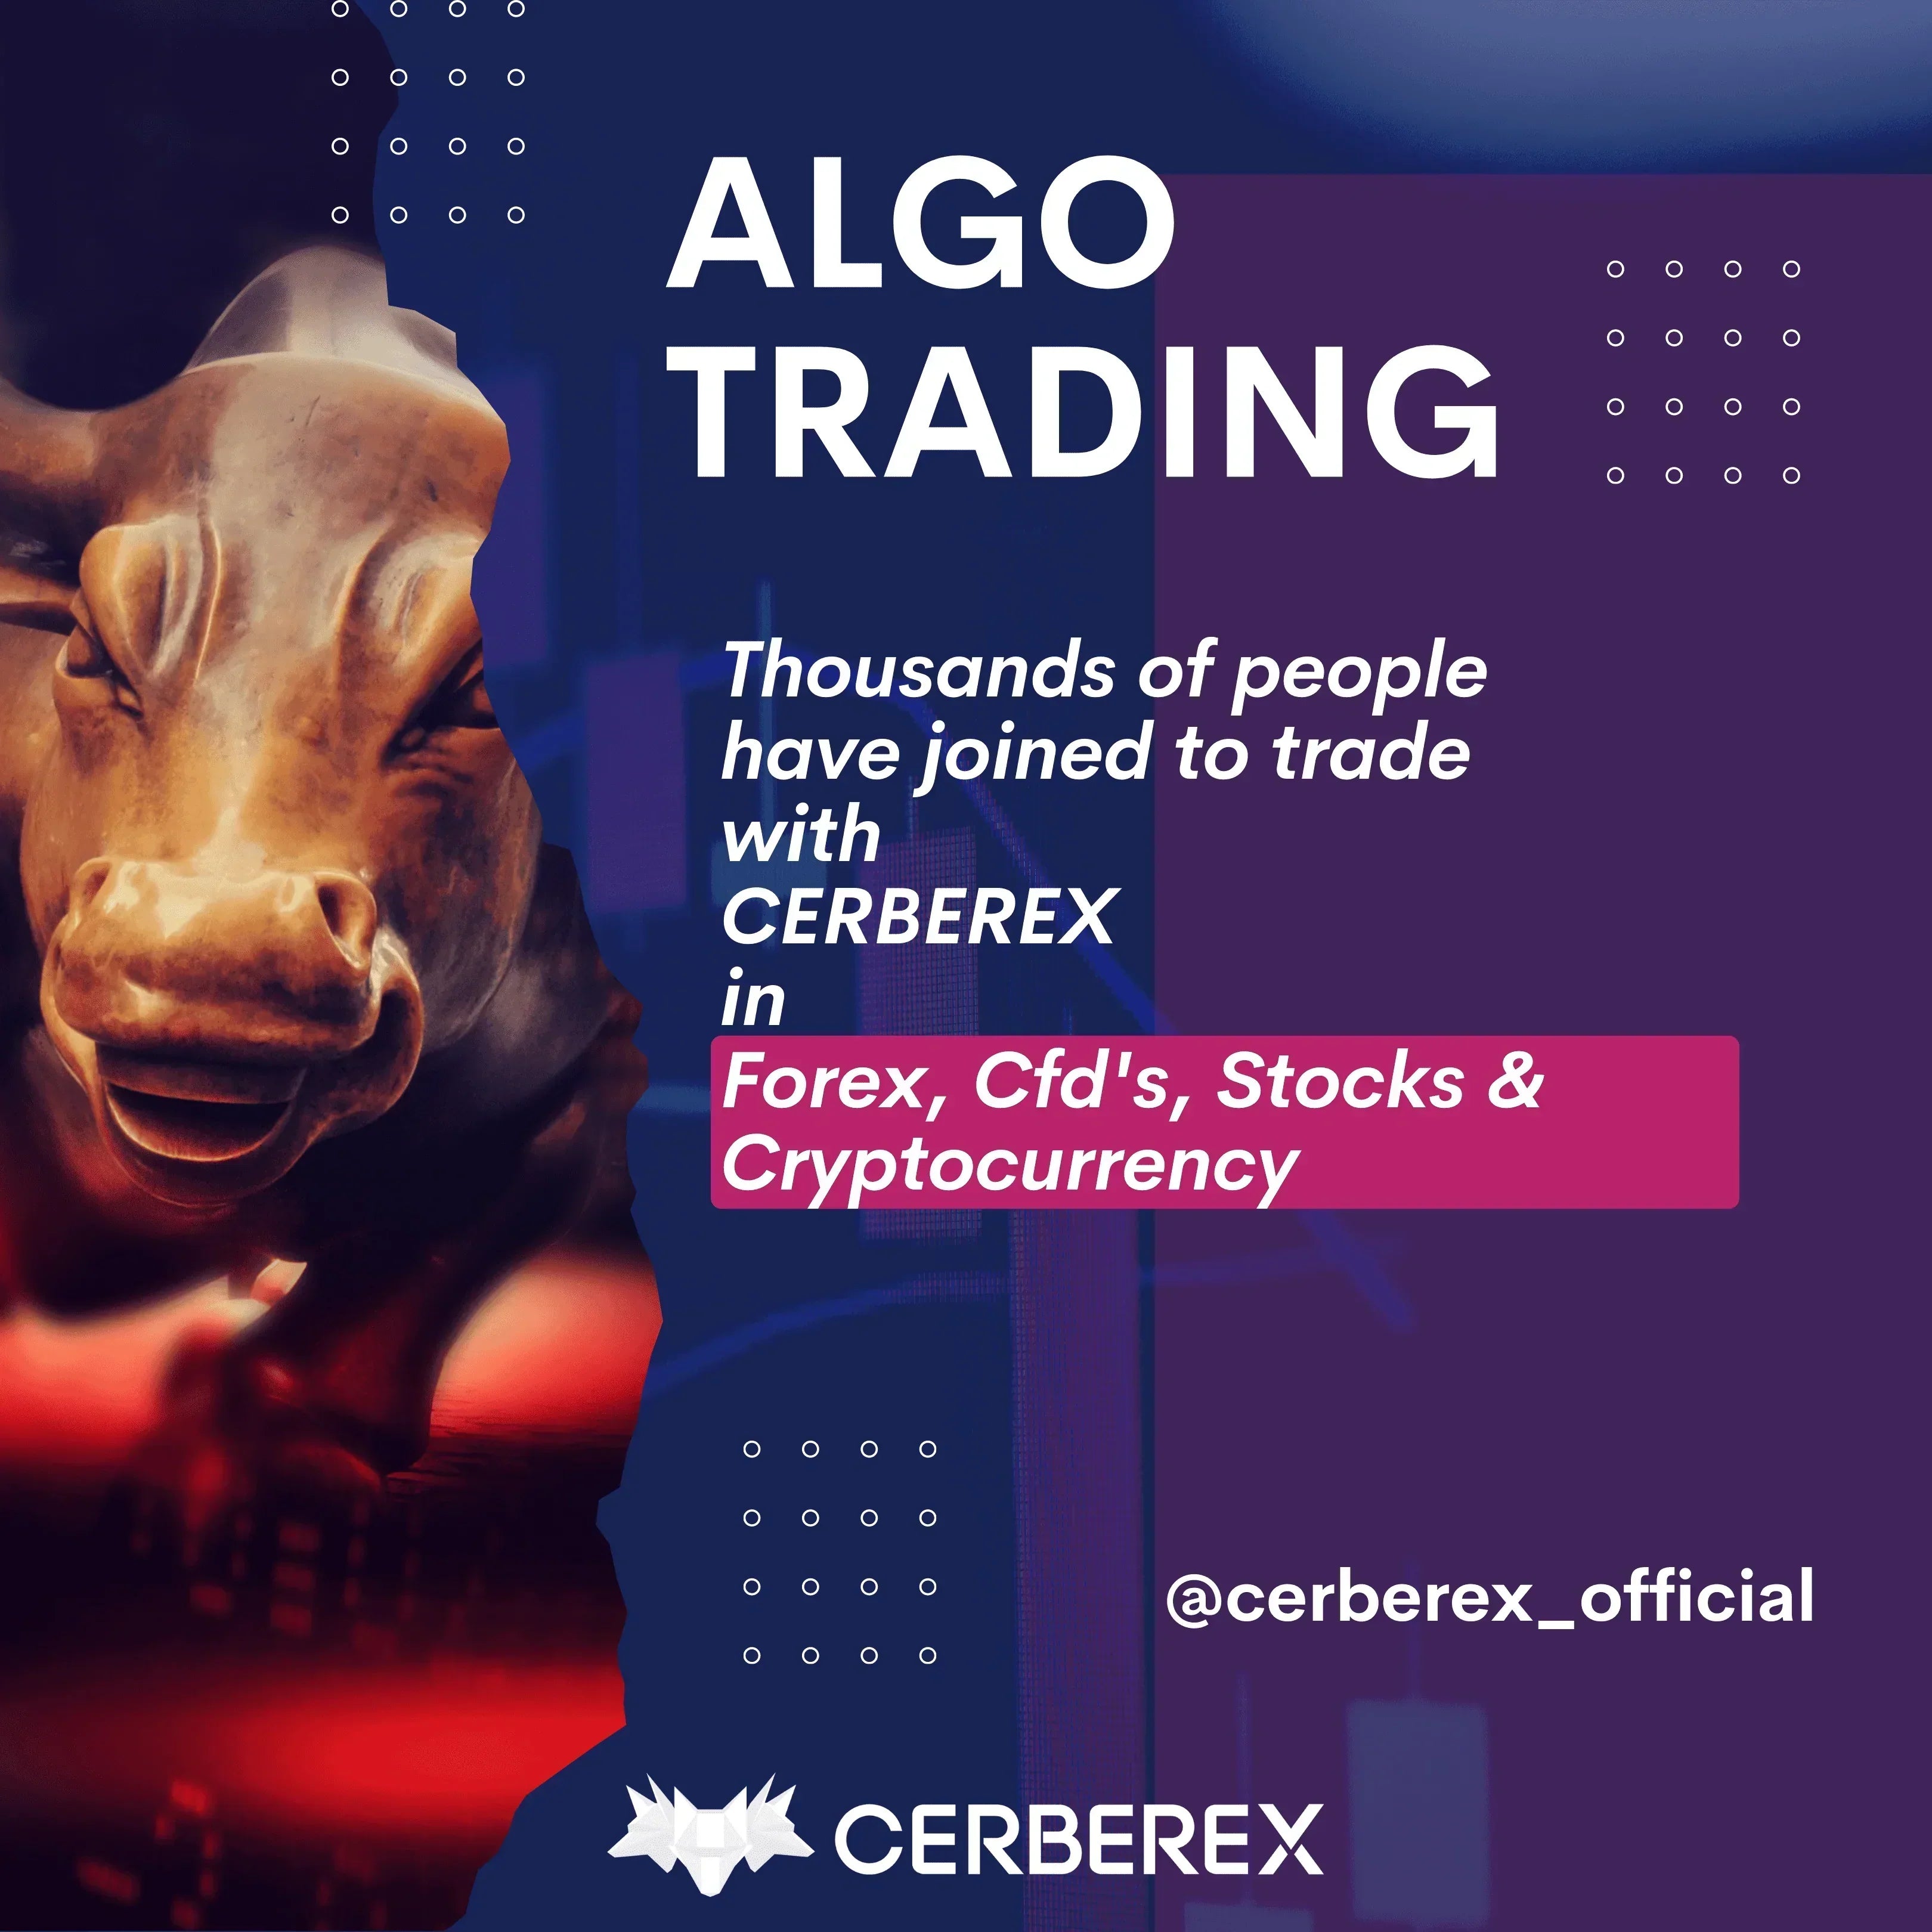 Cerberex Algo Trading US$50K Recovery Plan. - Cerberex 